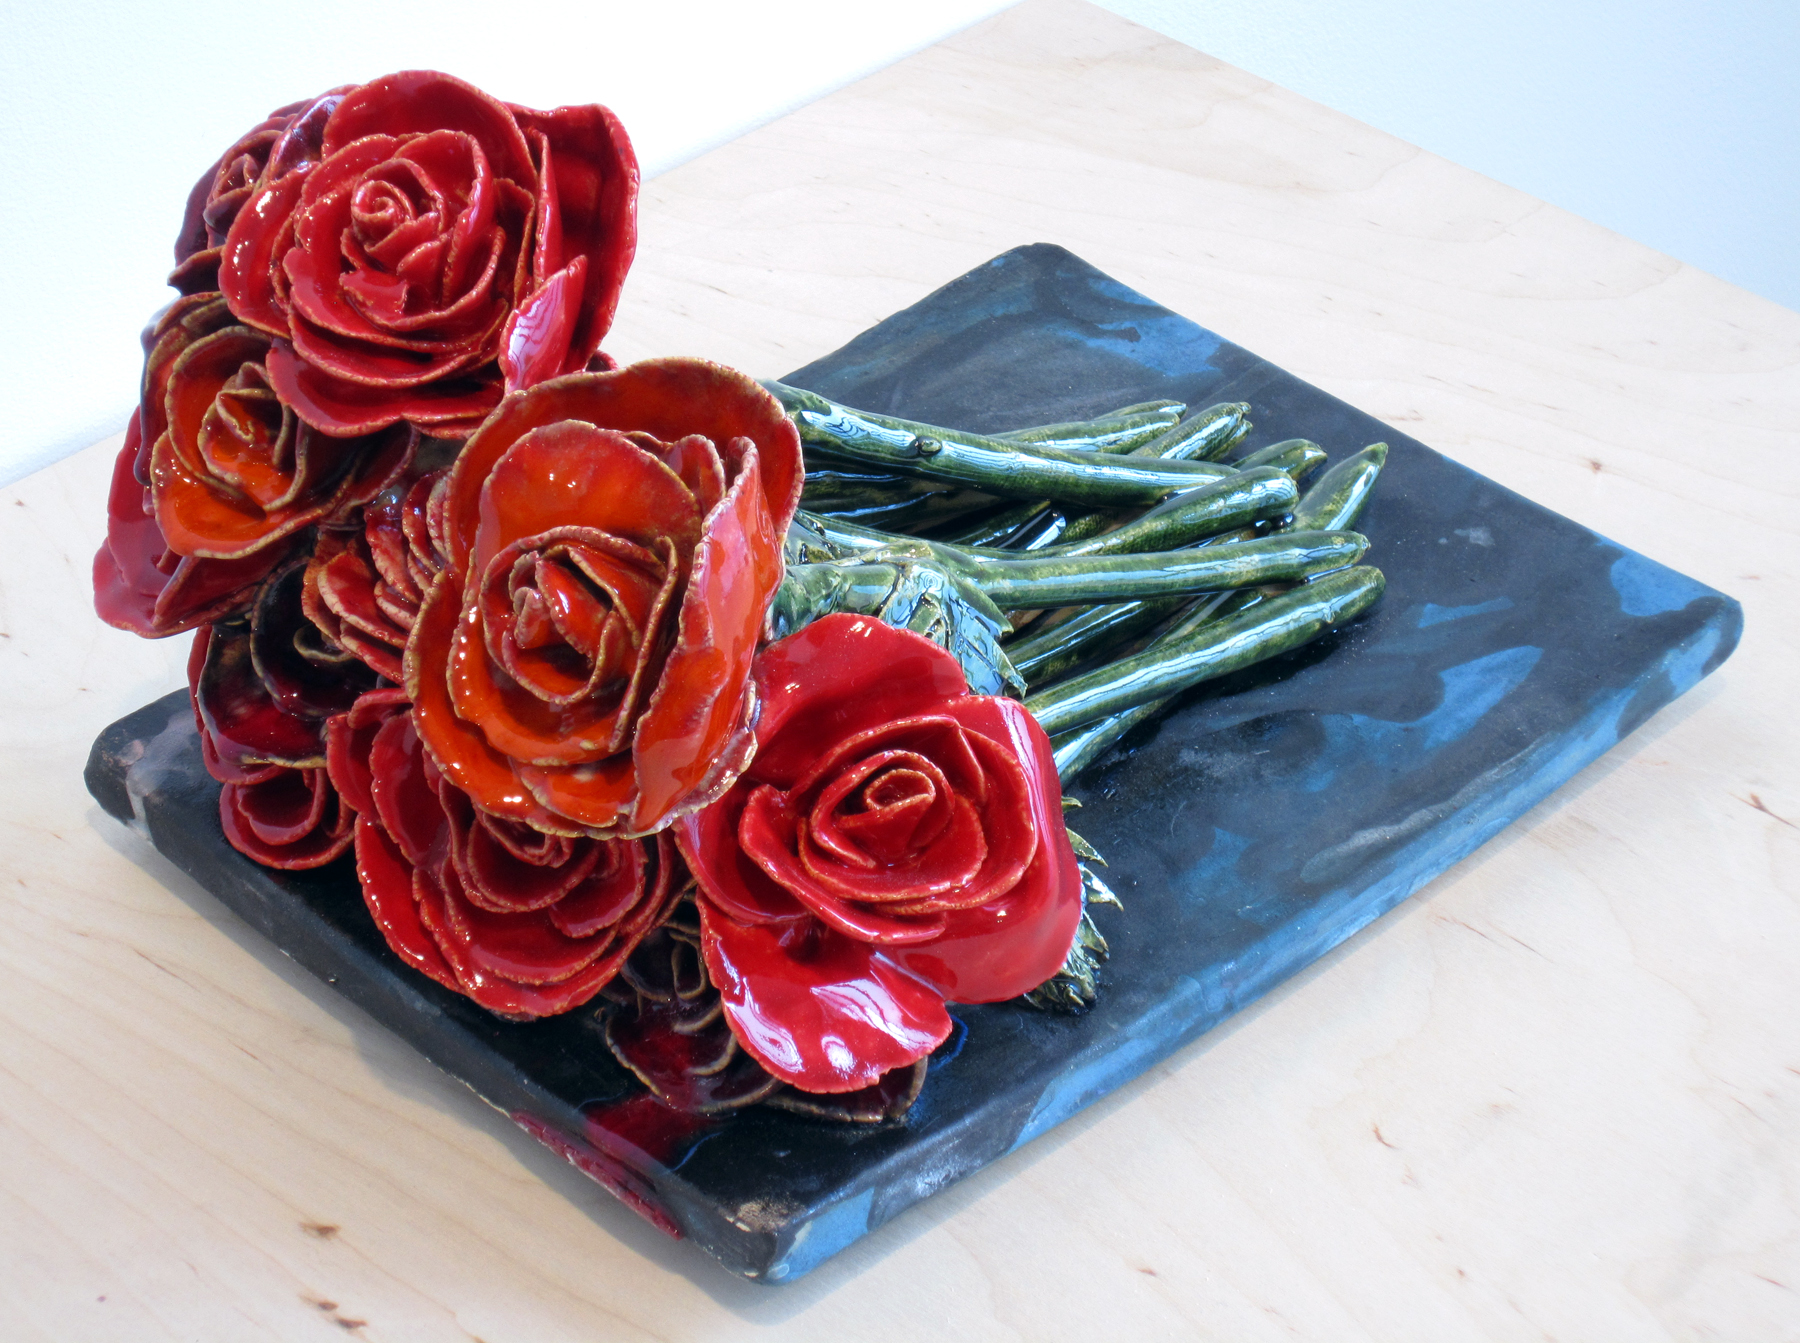   ERIK SCOLLON   Roses,&nbsp; 2013, glaze and underglaze on stoneware, 7" x 10" x 8"   